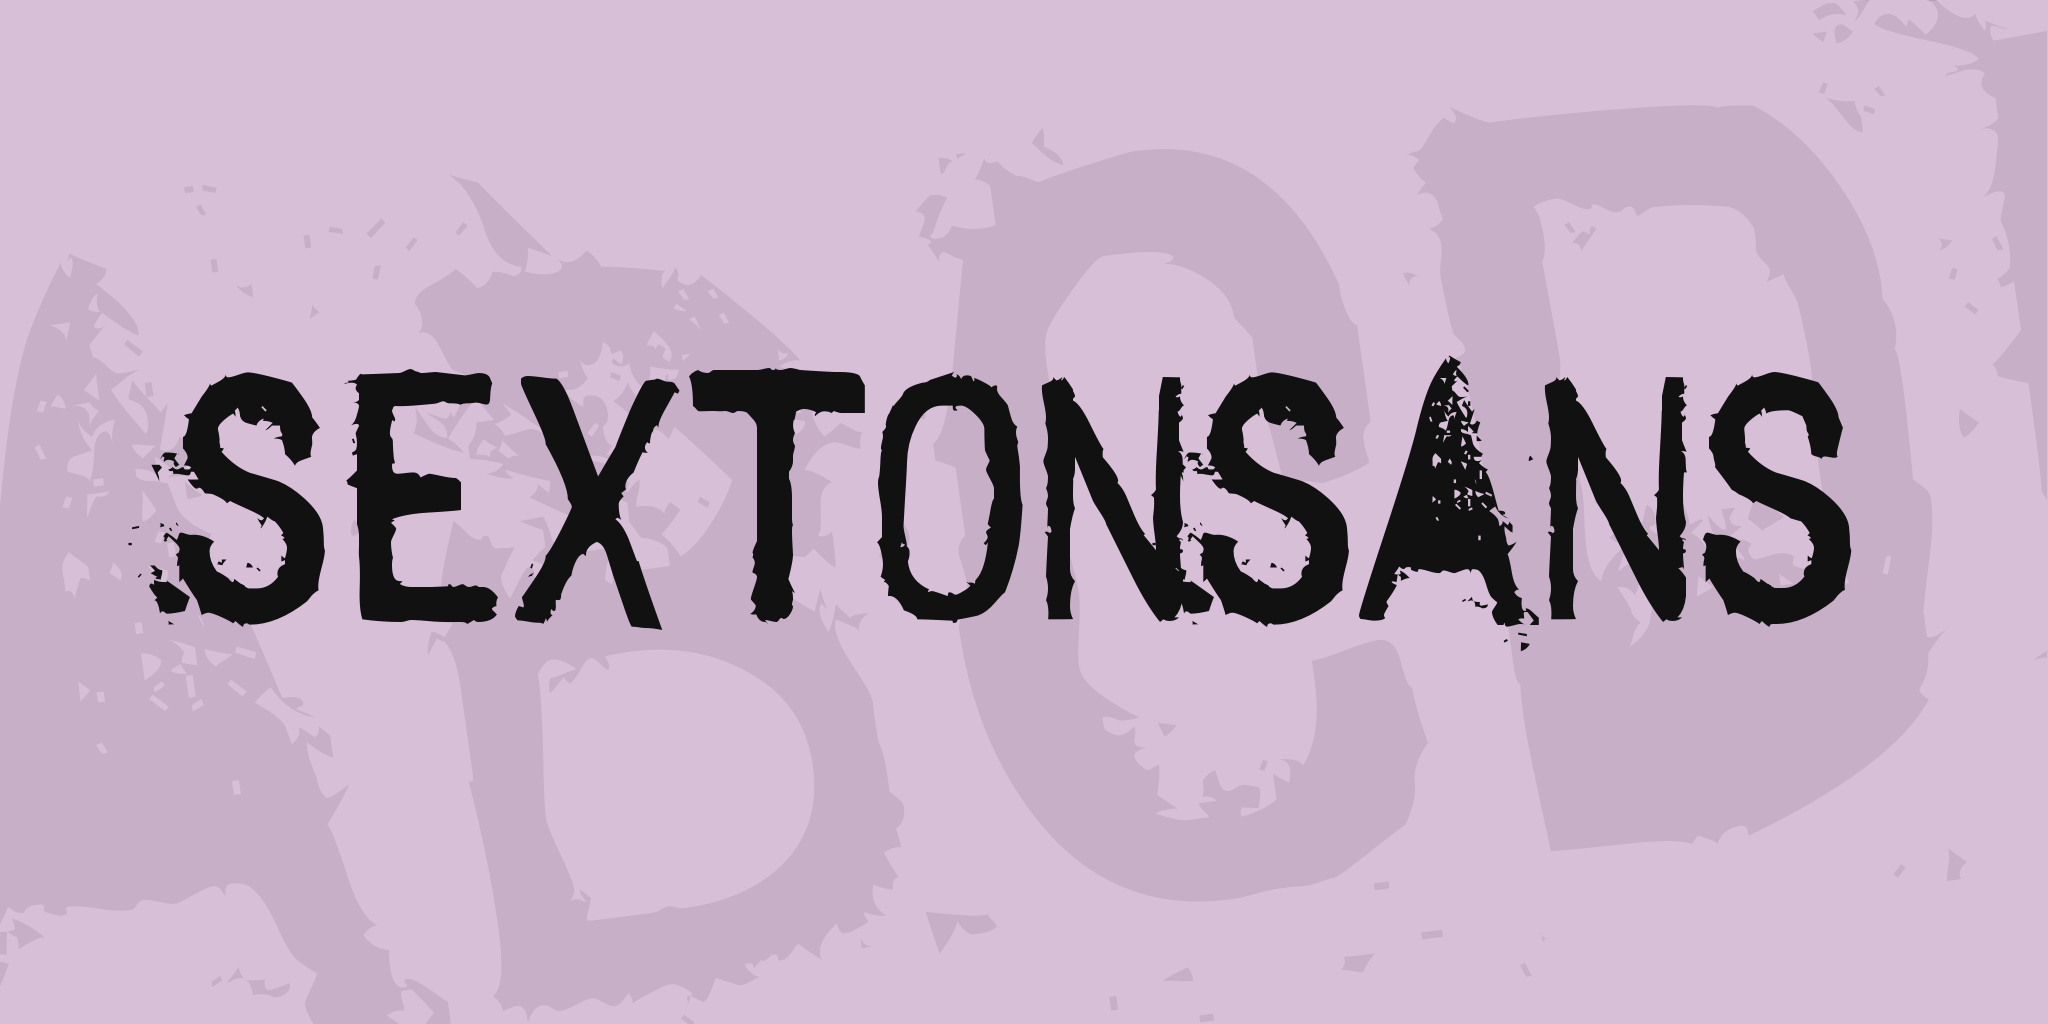 Sexton Sans